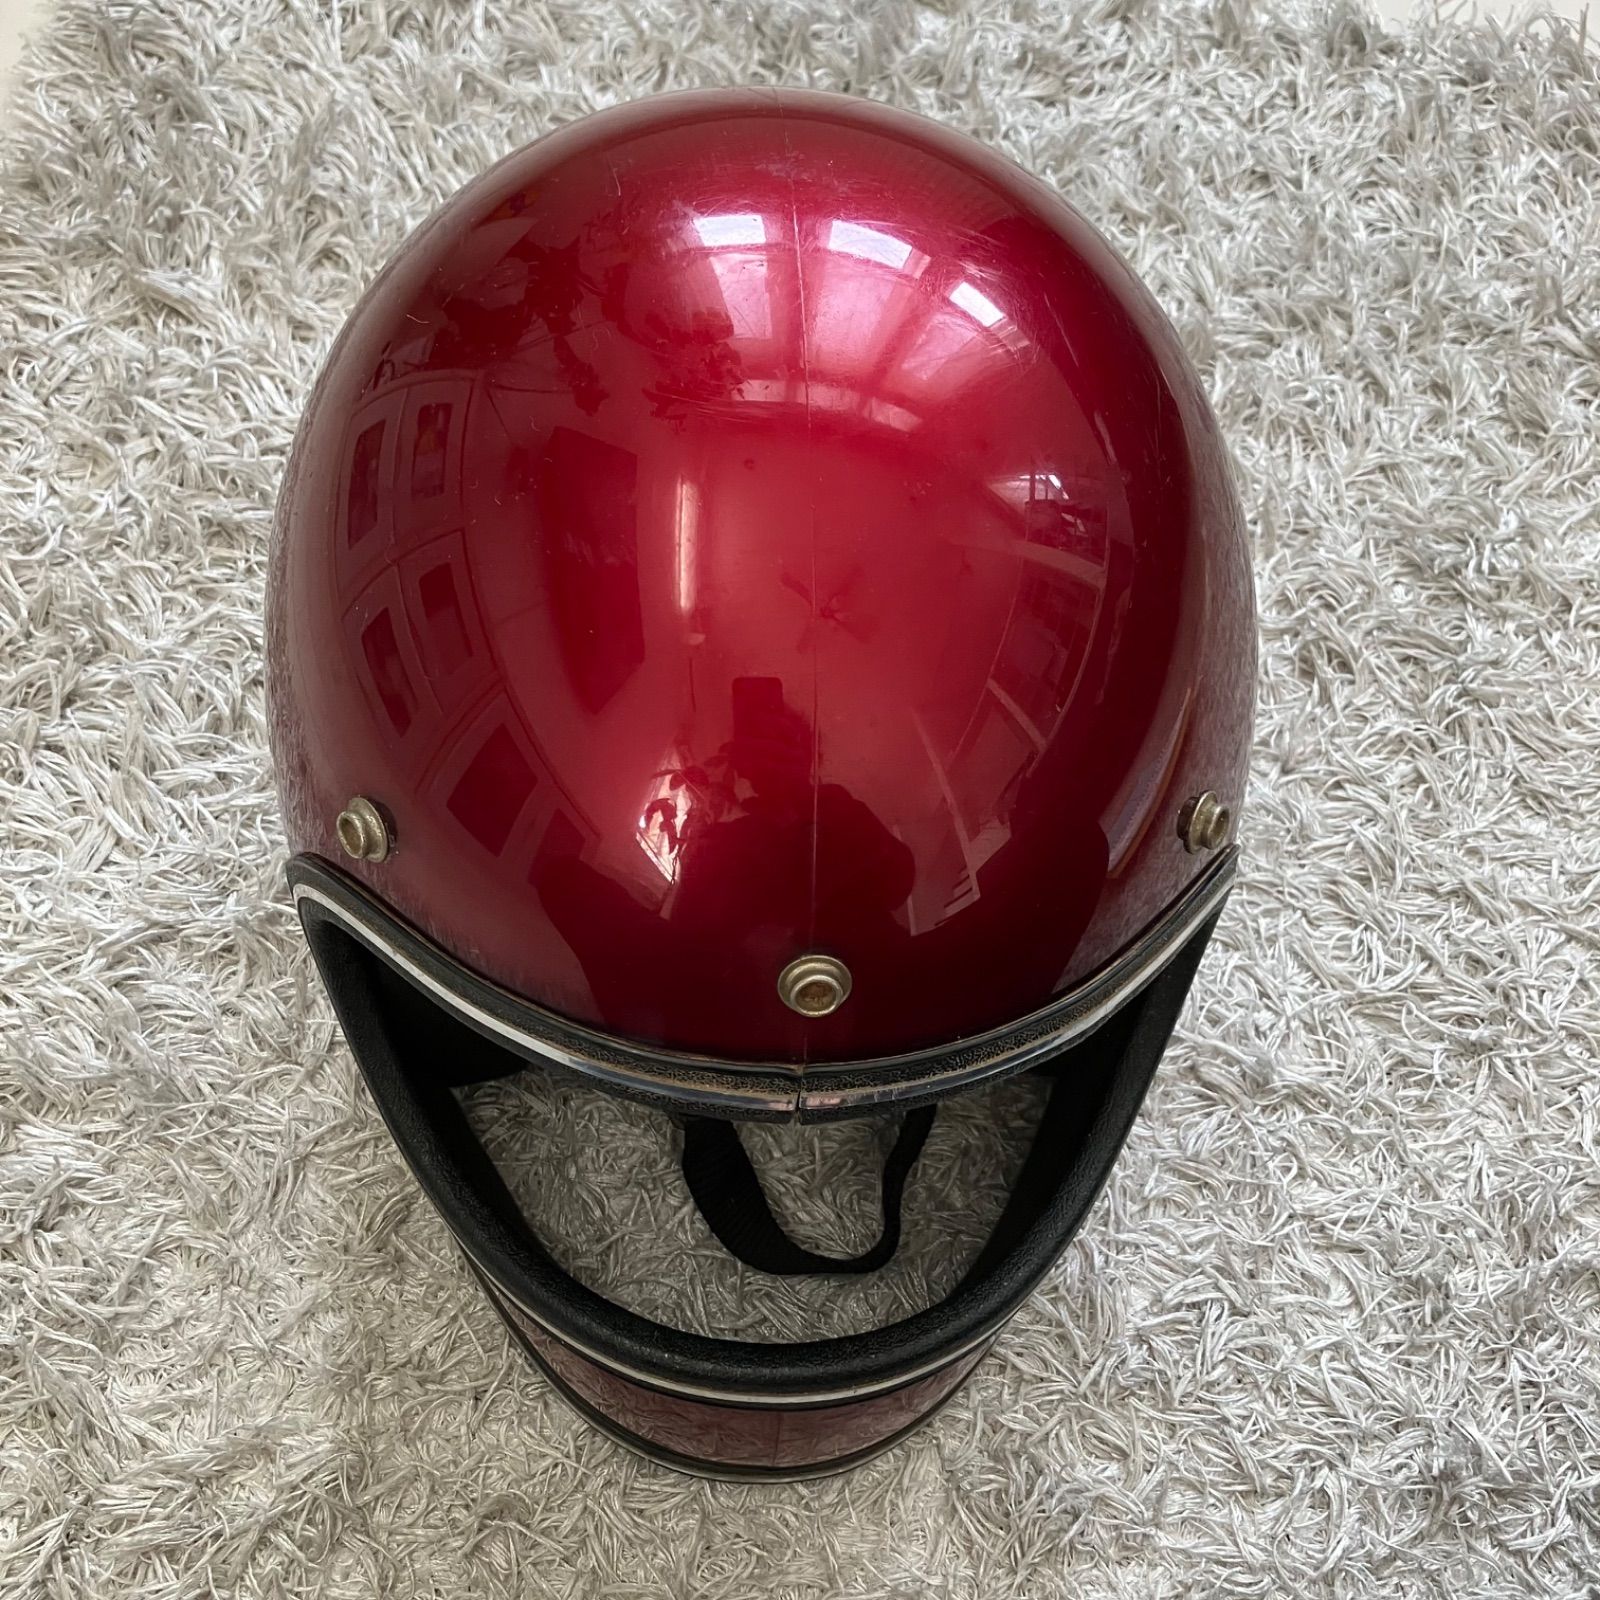 GRANT☆Lサイズ ビンテージヘルメット 80年代 赤色 希少 旧車 ハーレー 